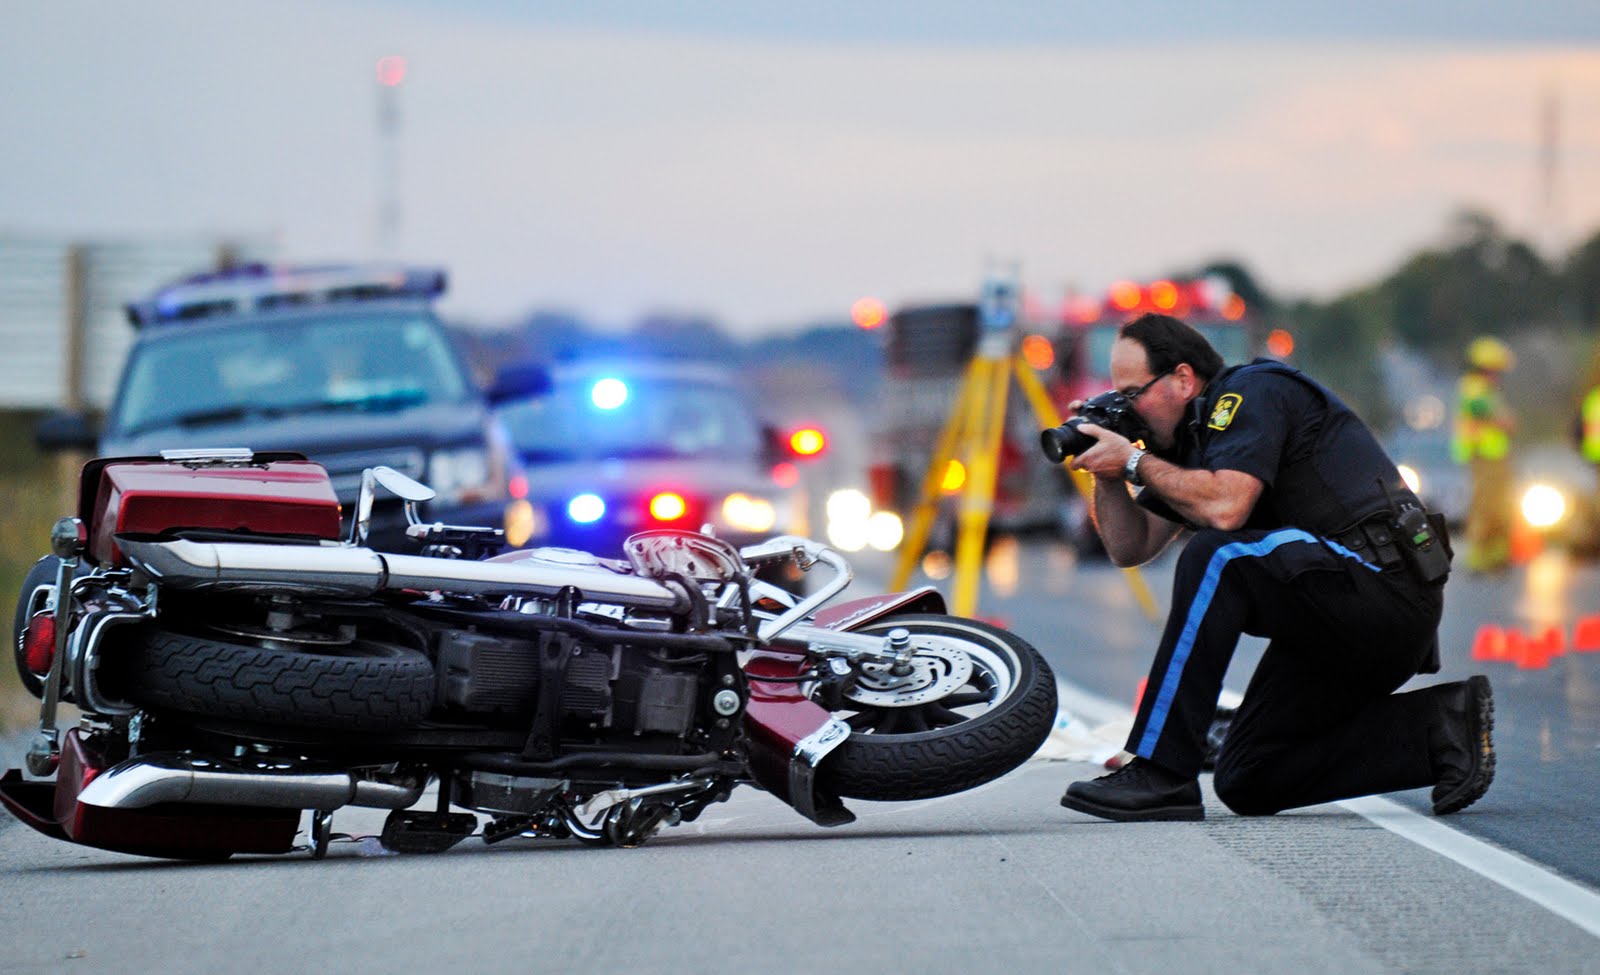 Seneca SC Motorcycle Accident Lawyer